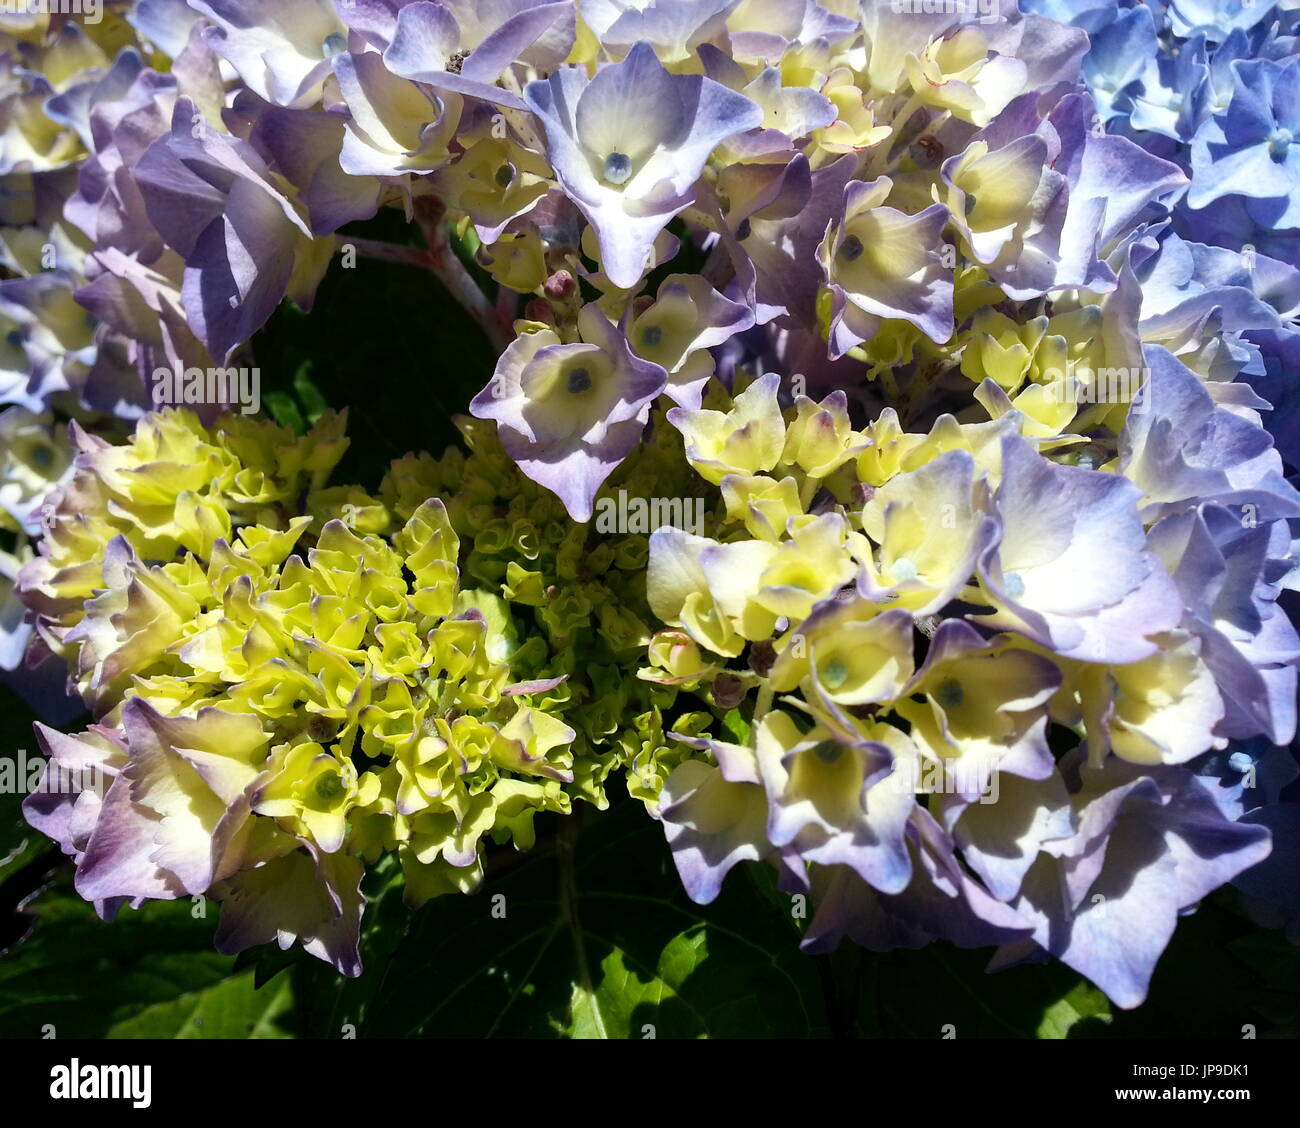 Hydrangea azul y púrpura Foto de stock